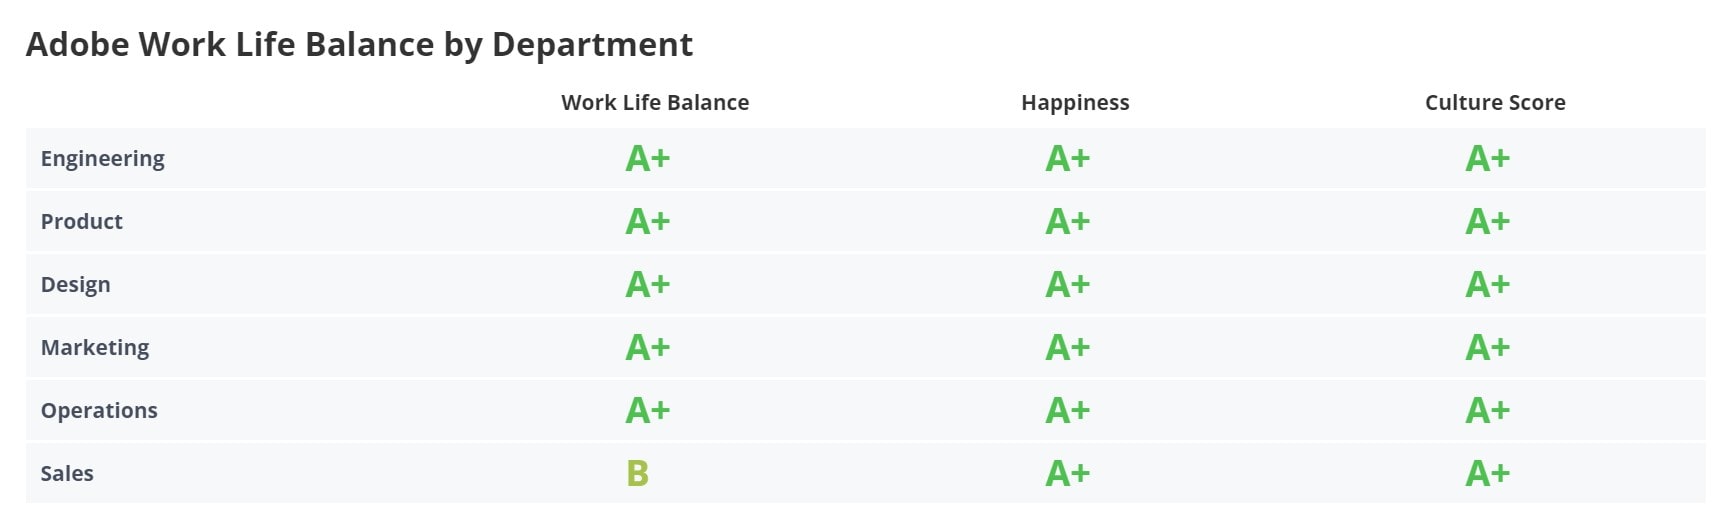 Adobe Work-Life Balance by Department